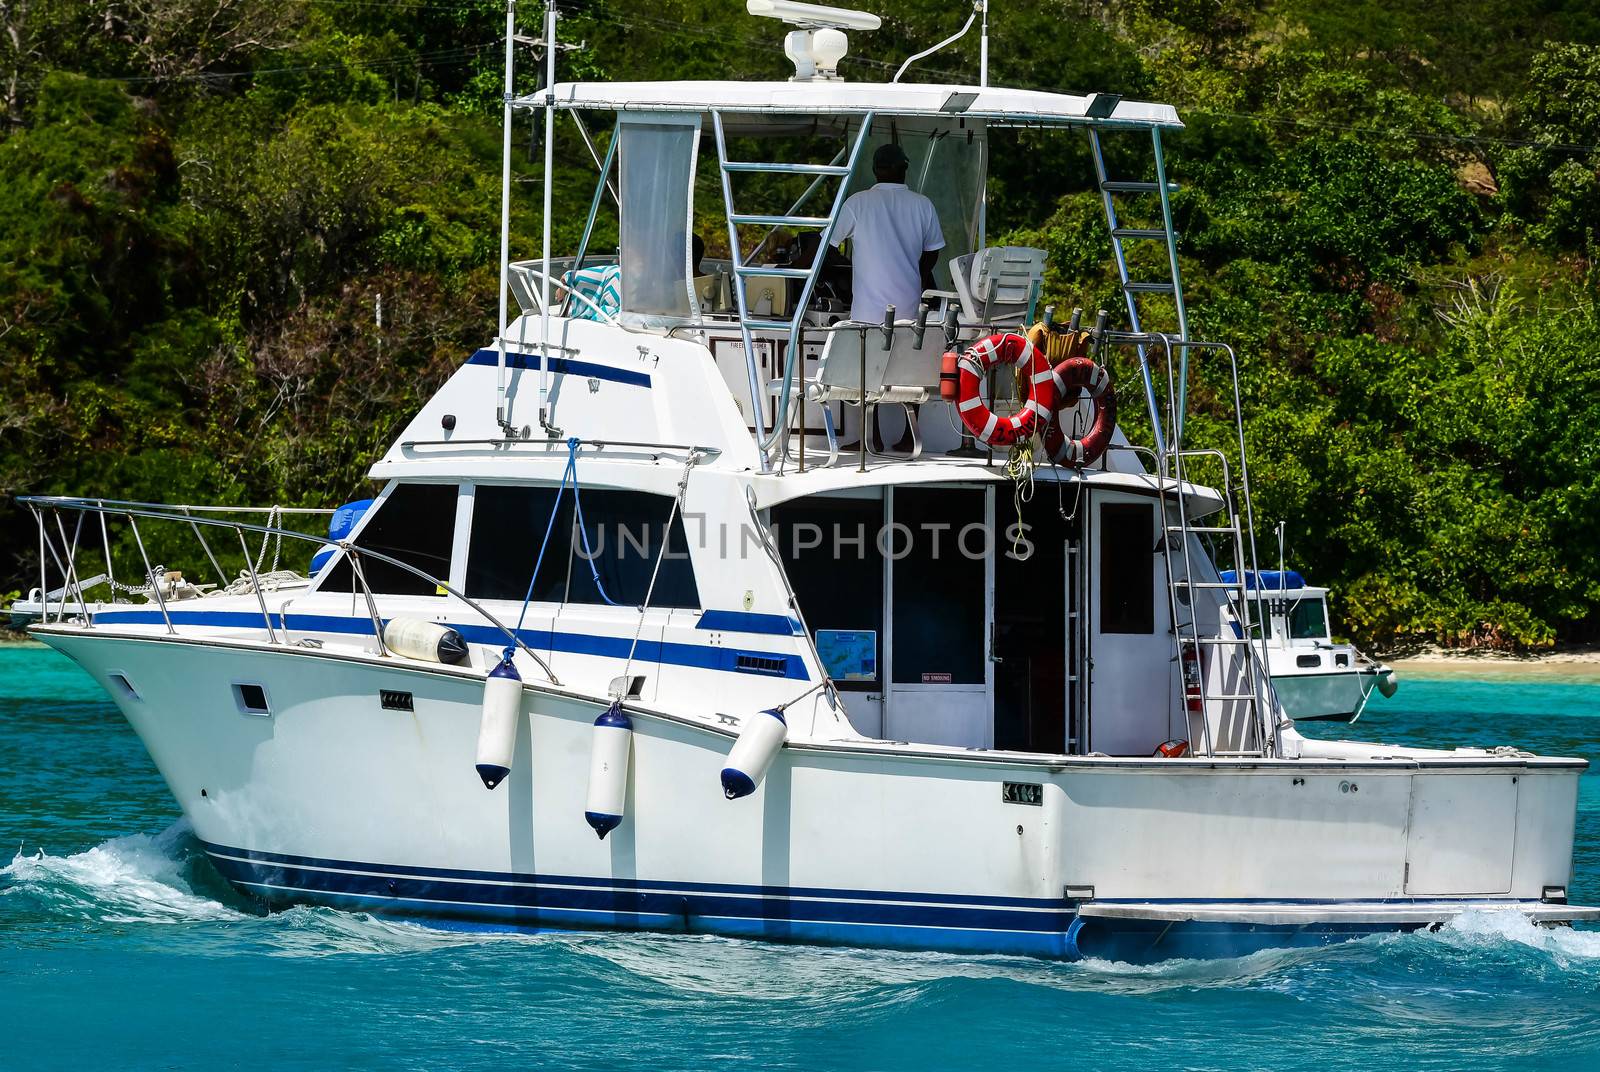 Charter fishing boat in British Virgin Islands heading in to pick up fishermen